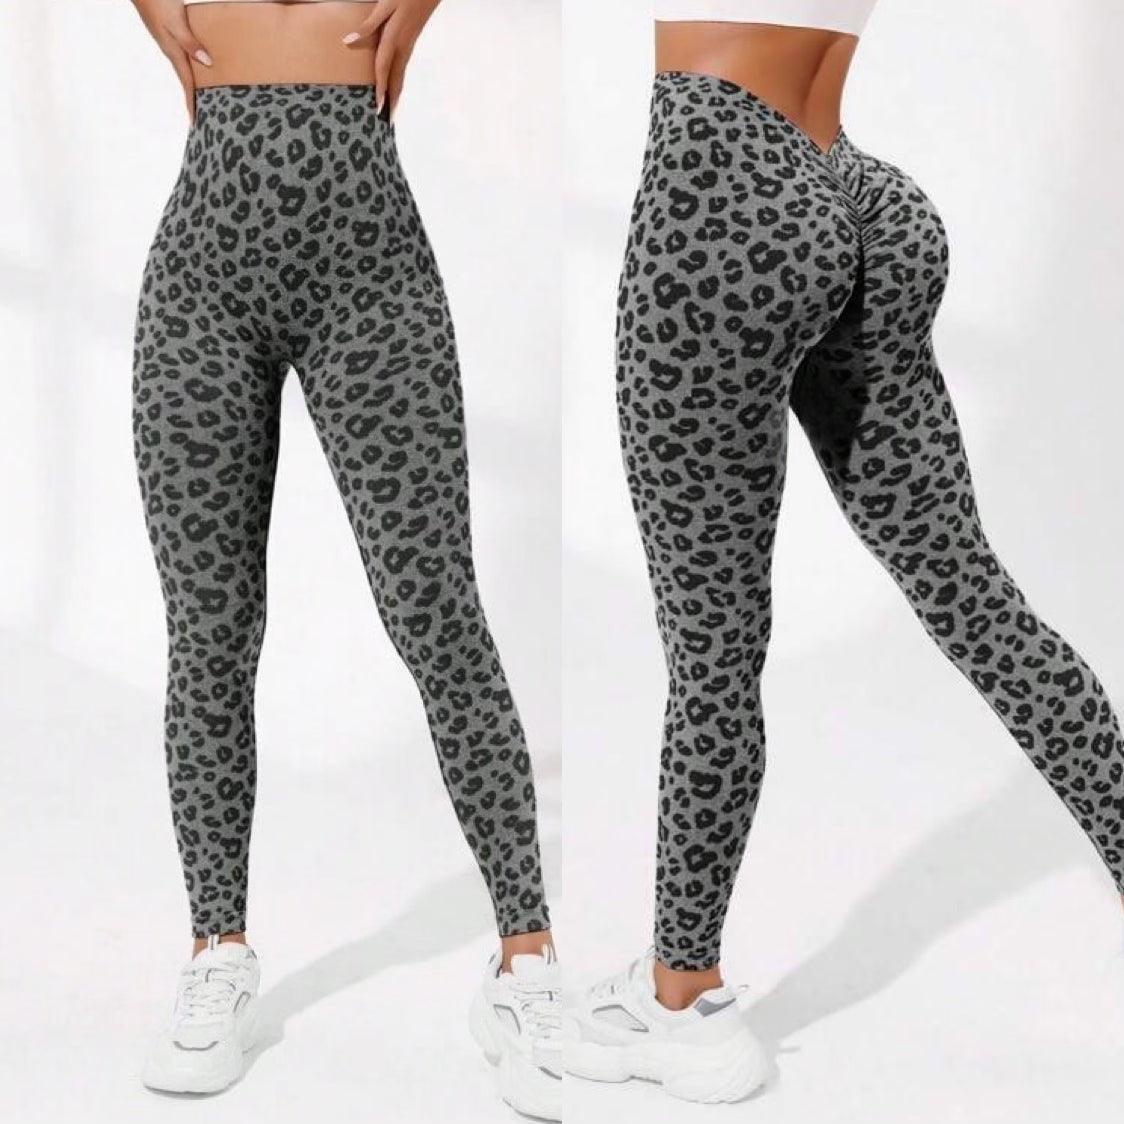 Sport Pants with 2 Packs 3D Printing Leopard Zebra Crocodile Women GYM Yoga  Leggings